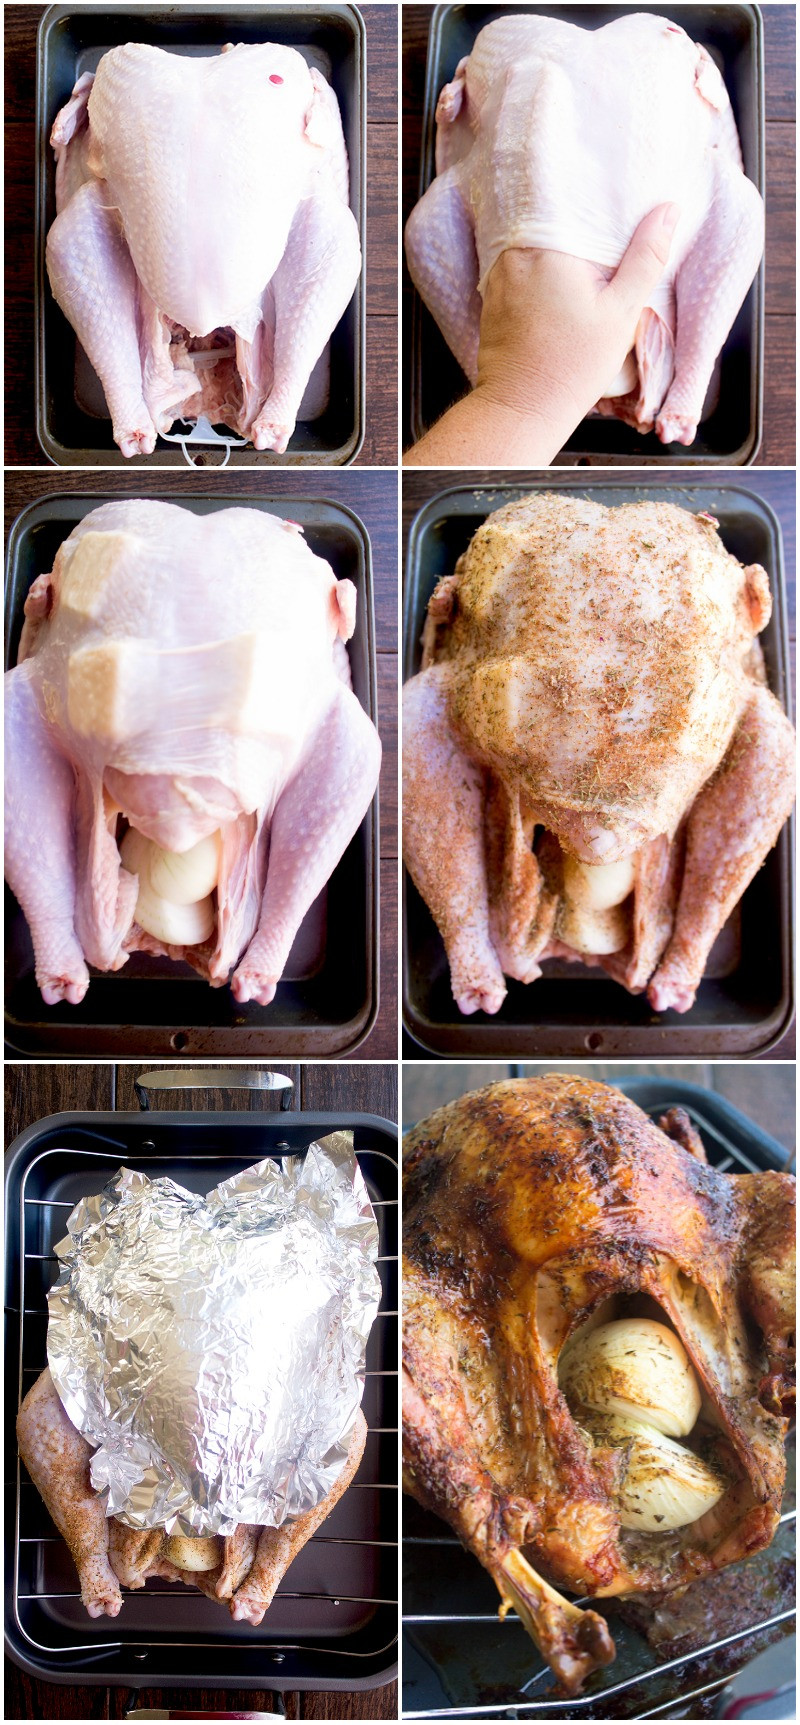 Easy Thanksgiving Turkey Recipe
 Best Thanksgiving Turkey Recipe How to Cook a Turkey